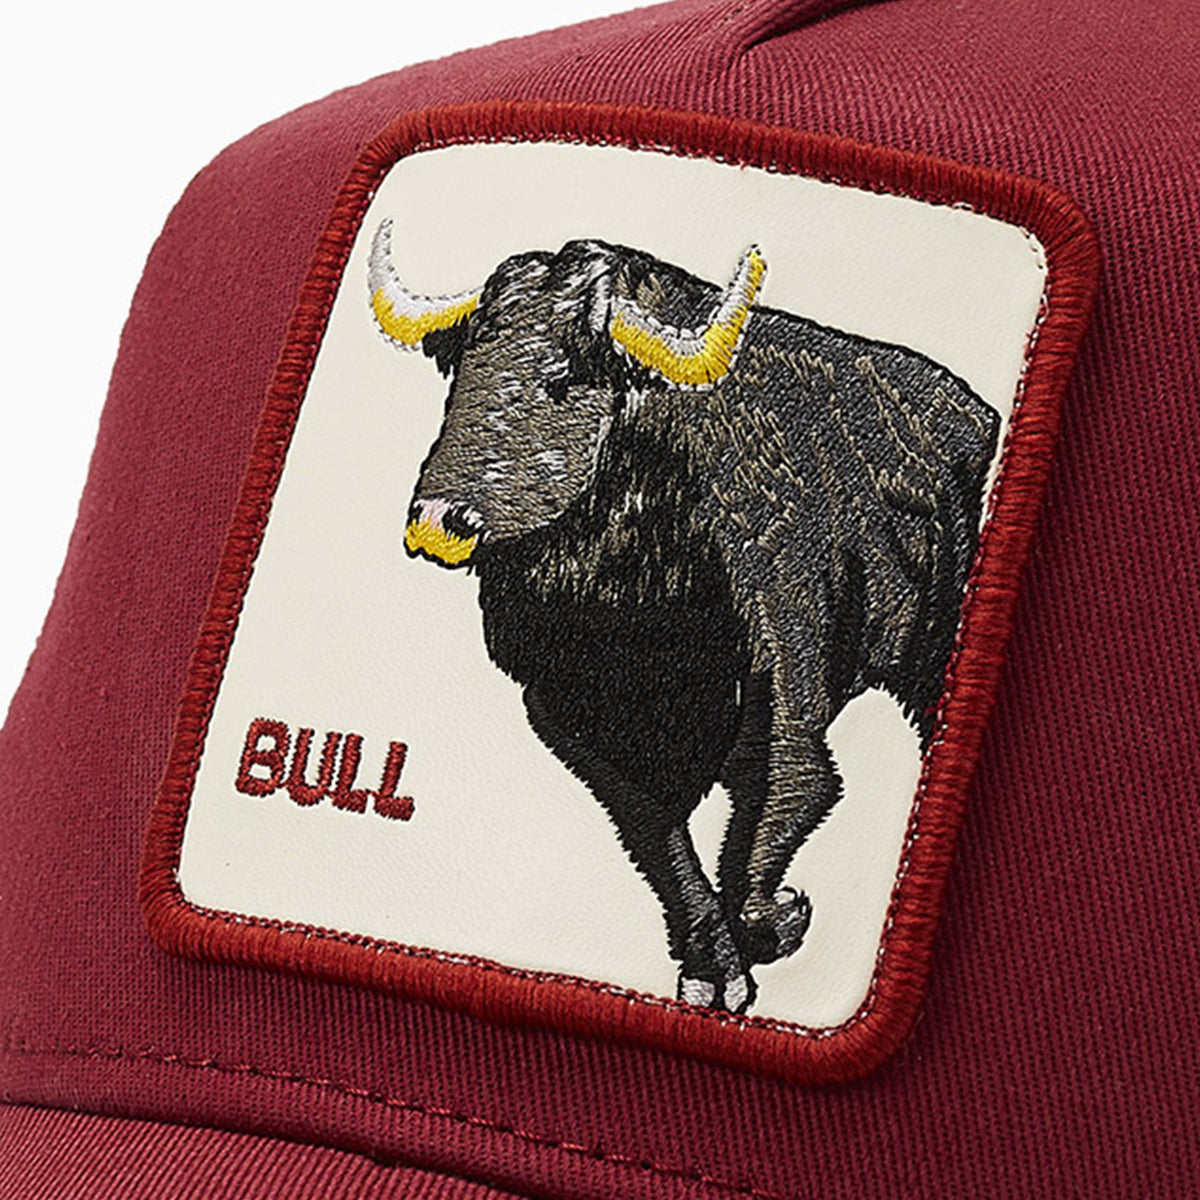 goorin-bros-the-bull-trucker-hat-101-0521-red